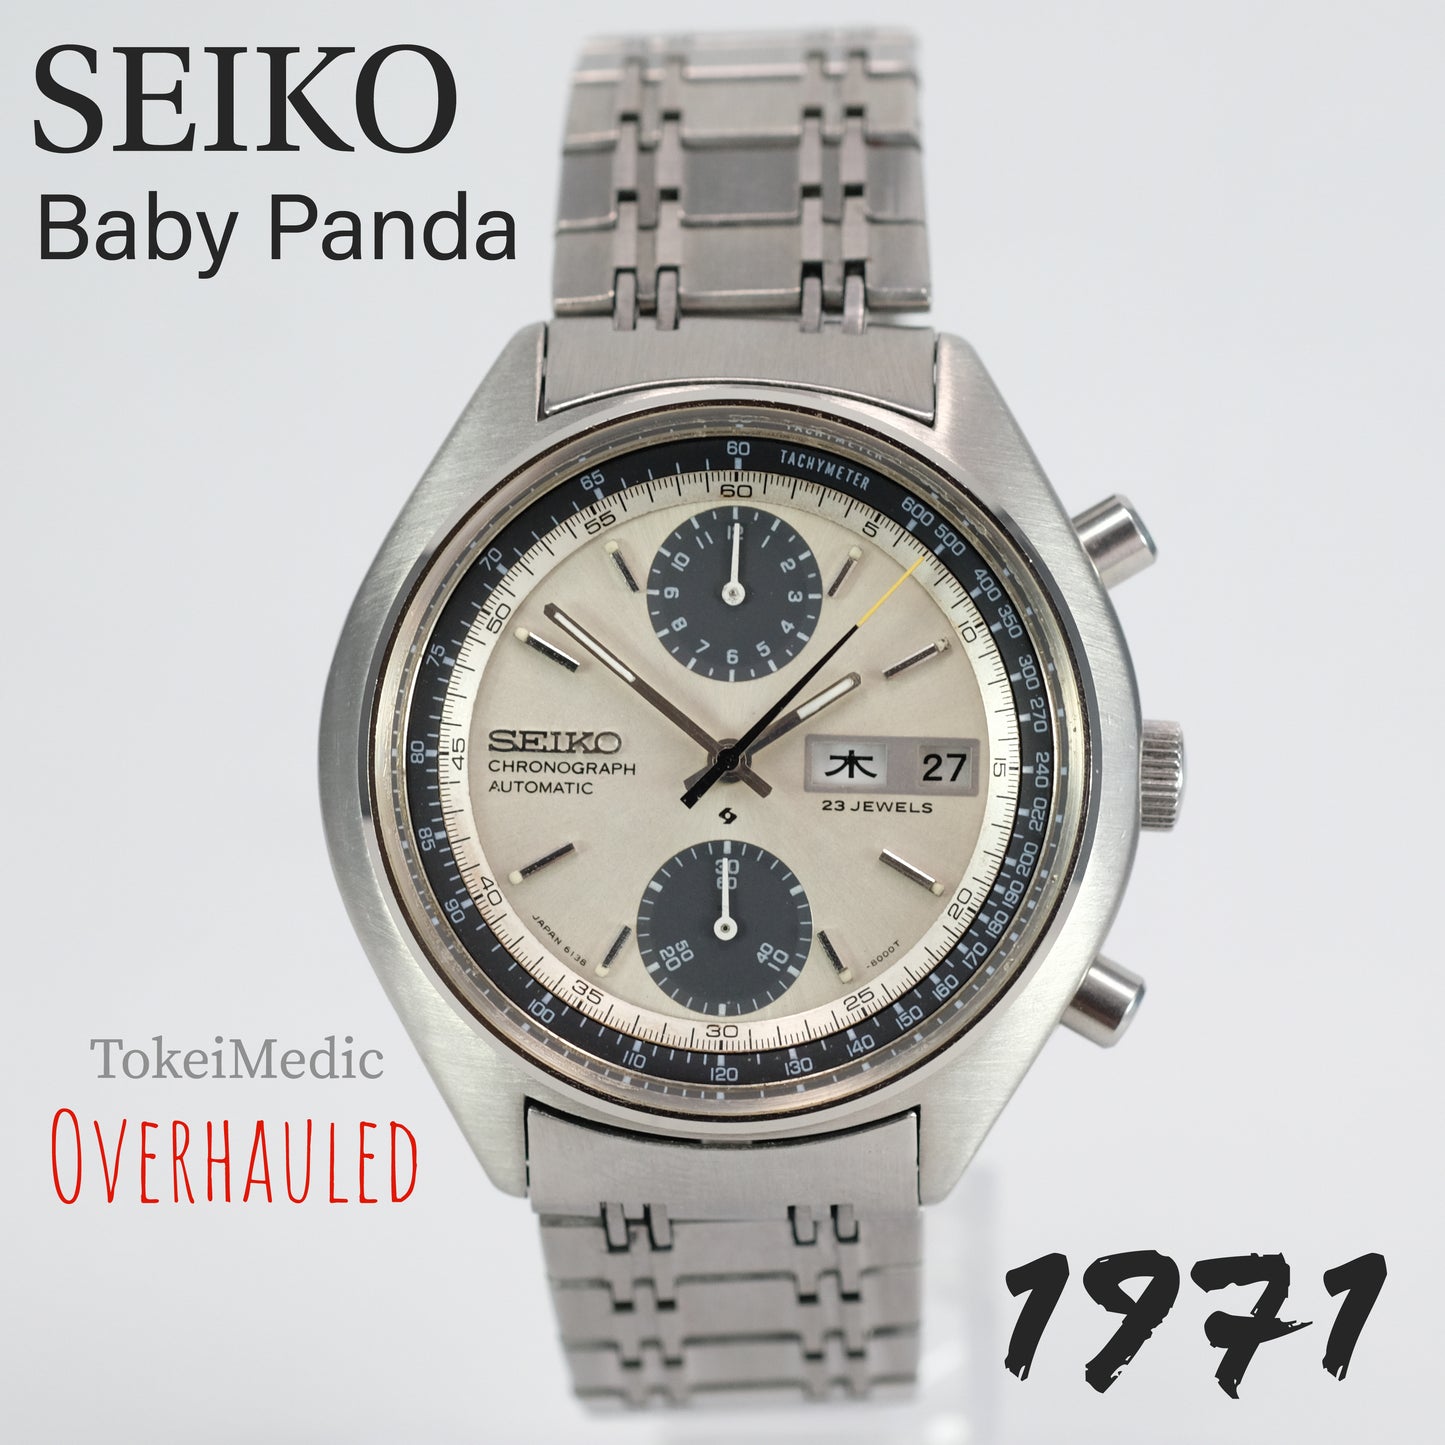 1971 Seiko Chronograph "Baby Panda" 6138-8000